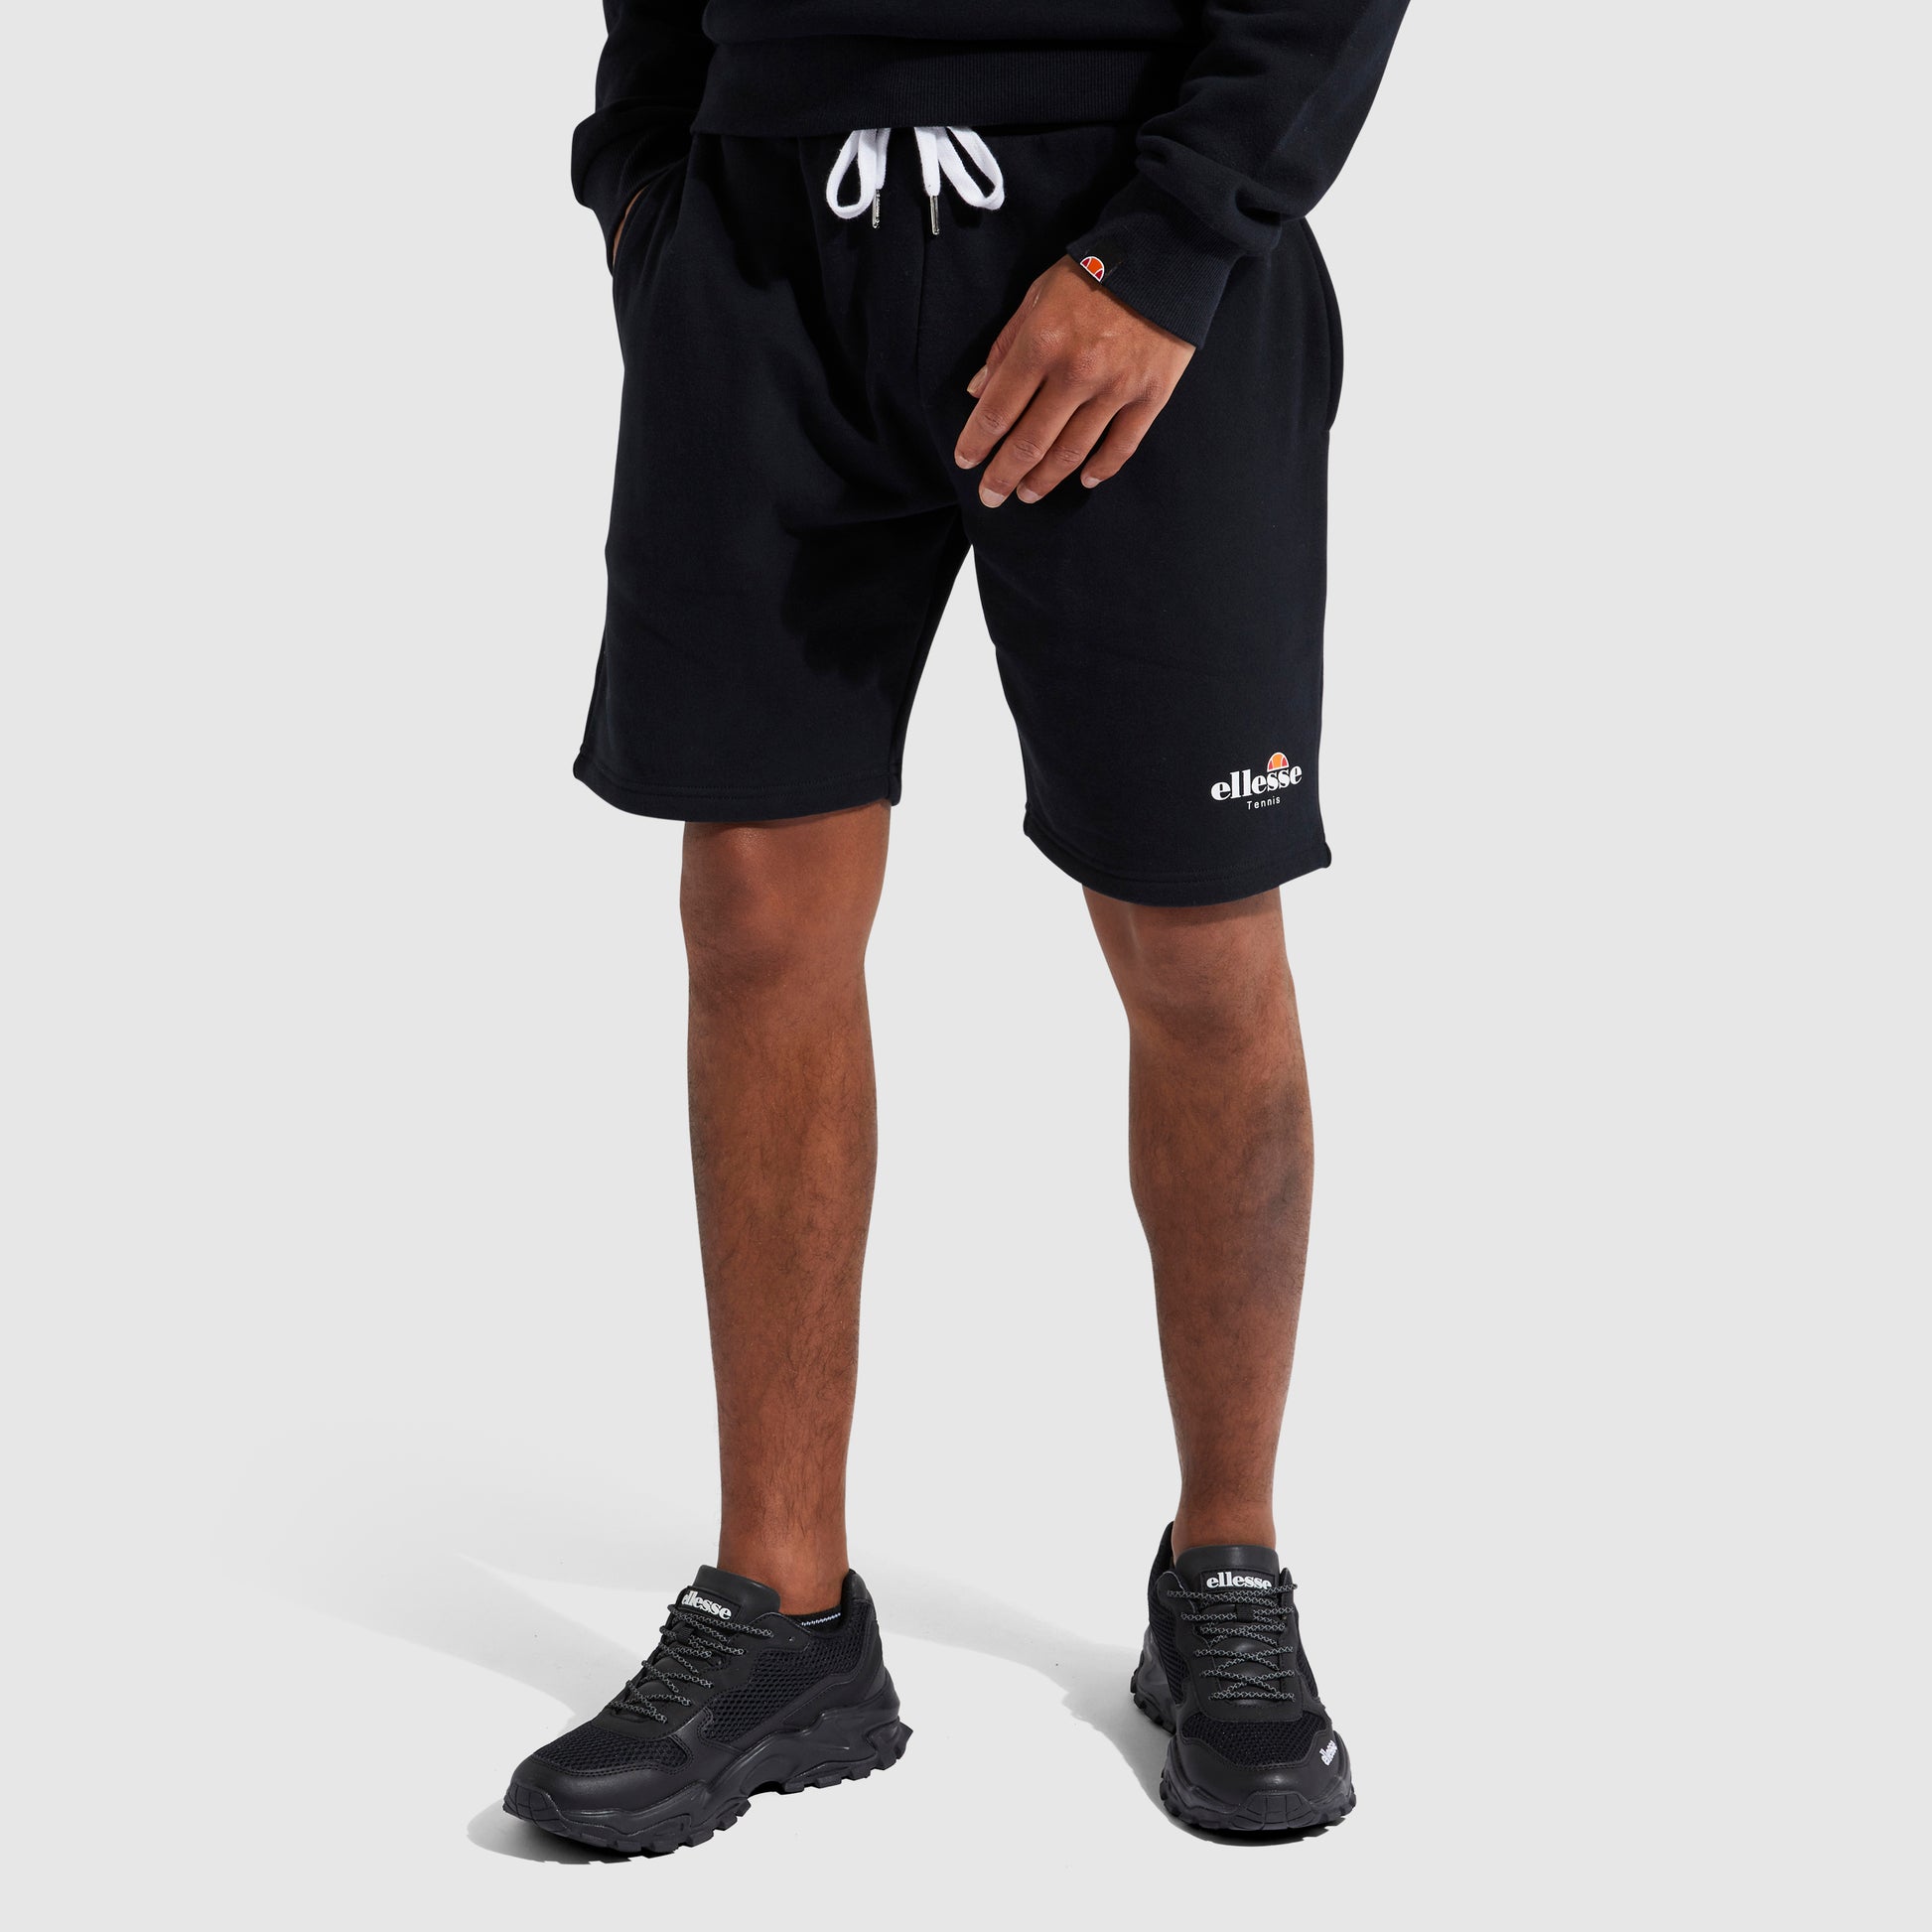 ellesse Tennis Men\'s NewCo – Sweat Brands Shorts